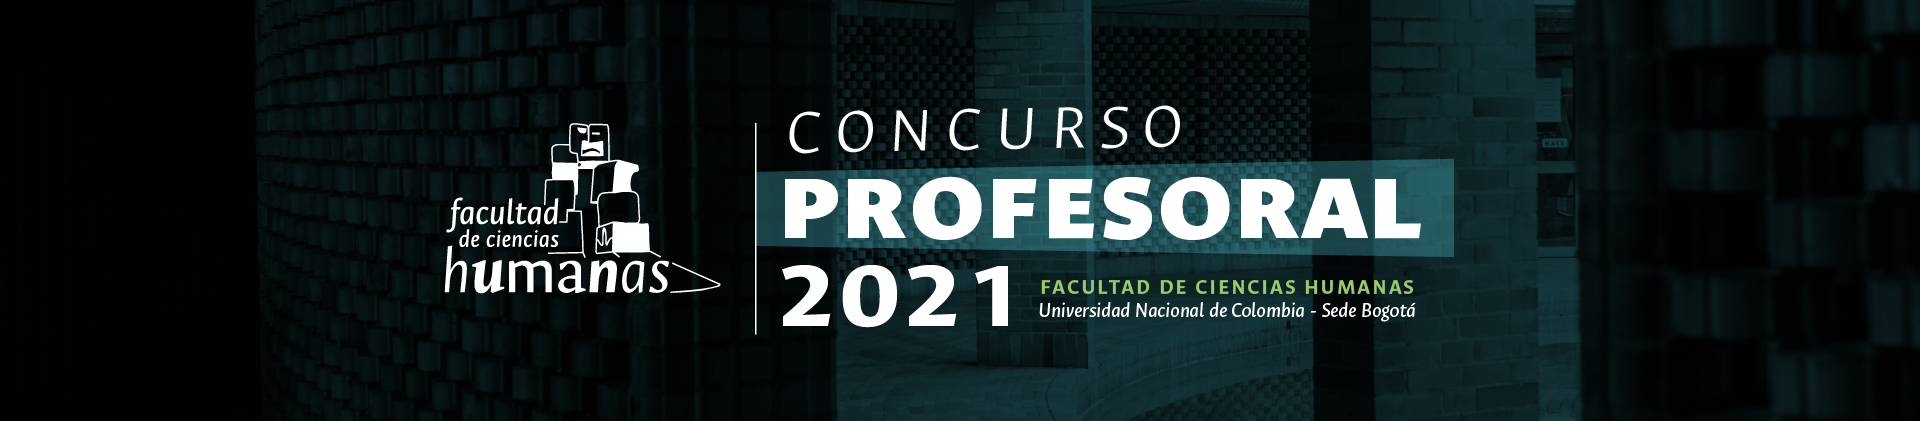 Concurso profesoral - FCH 2021